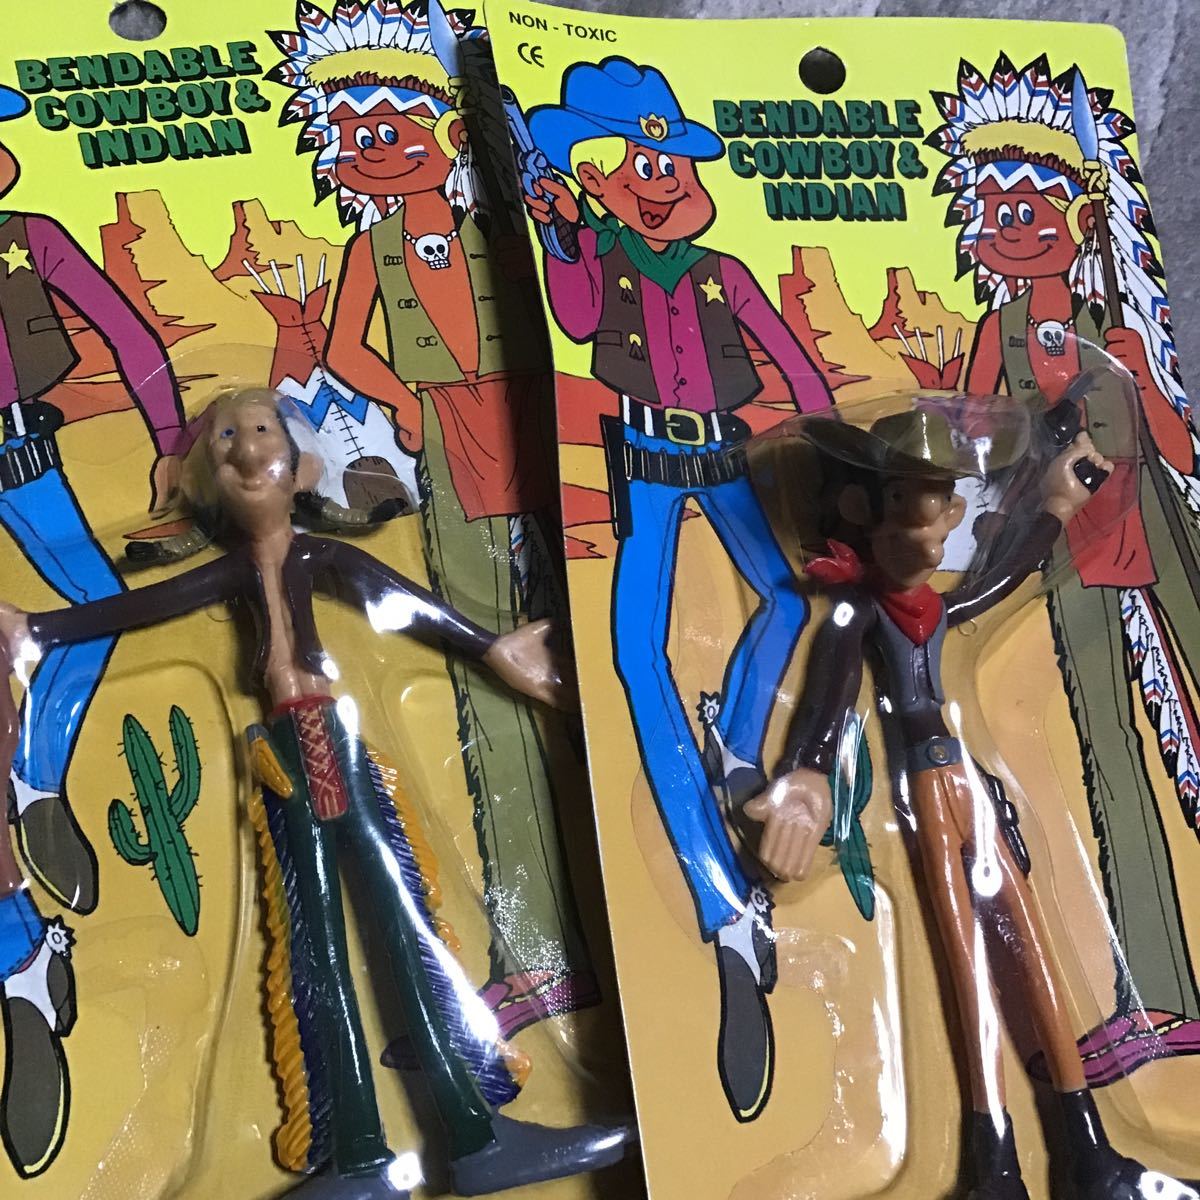 Bendable cowboy&indian ベンダブル カーボーイ インディアン 可動 人形 ゴム人形 針金人形 フィギュア 新品 レア アンティーク figure_画像3